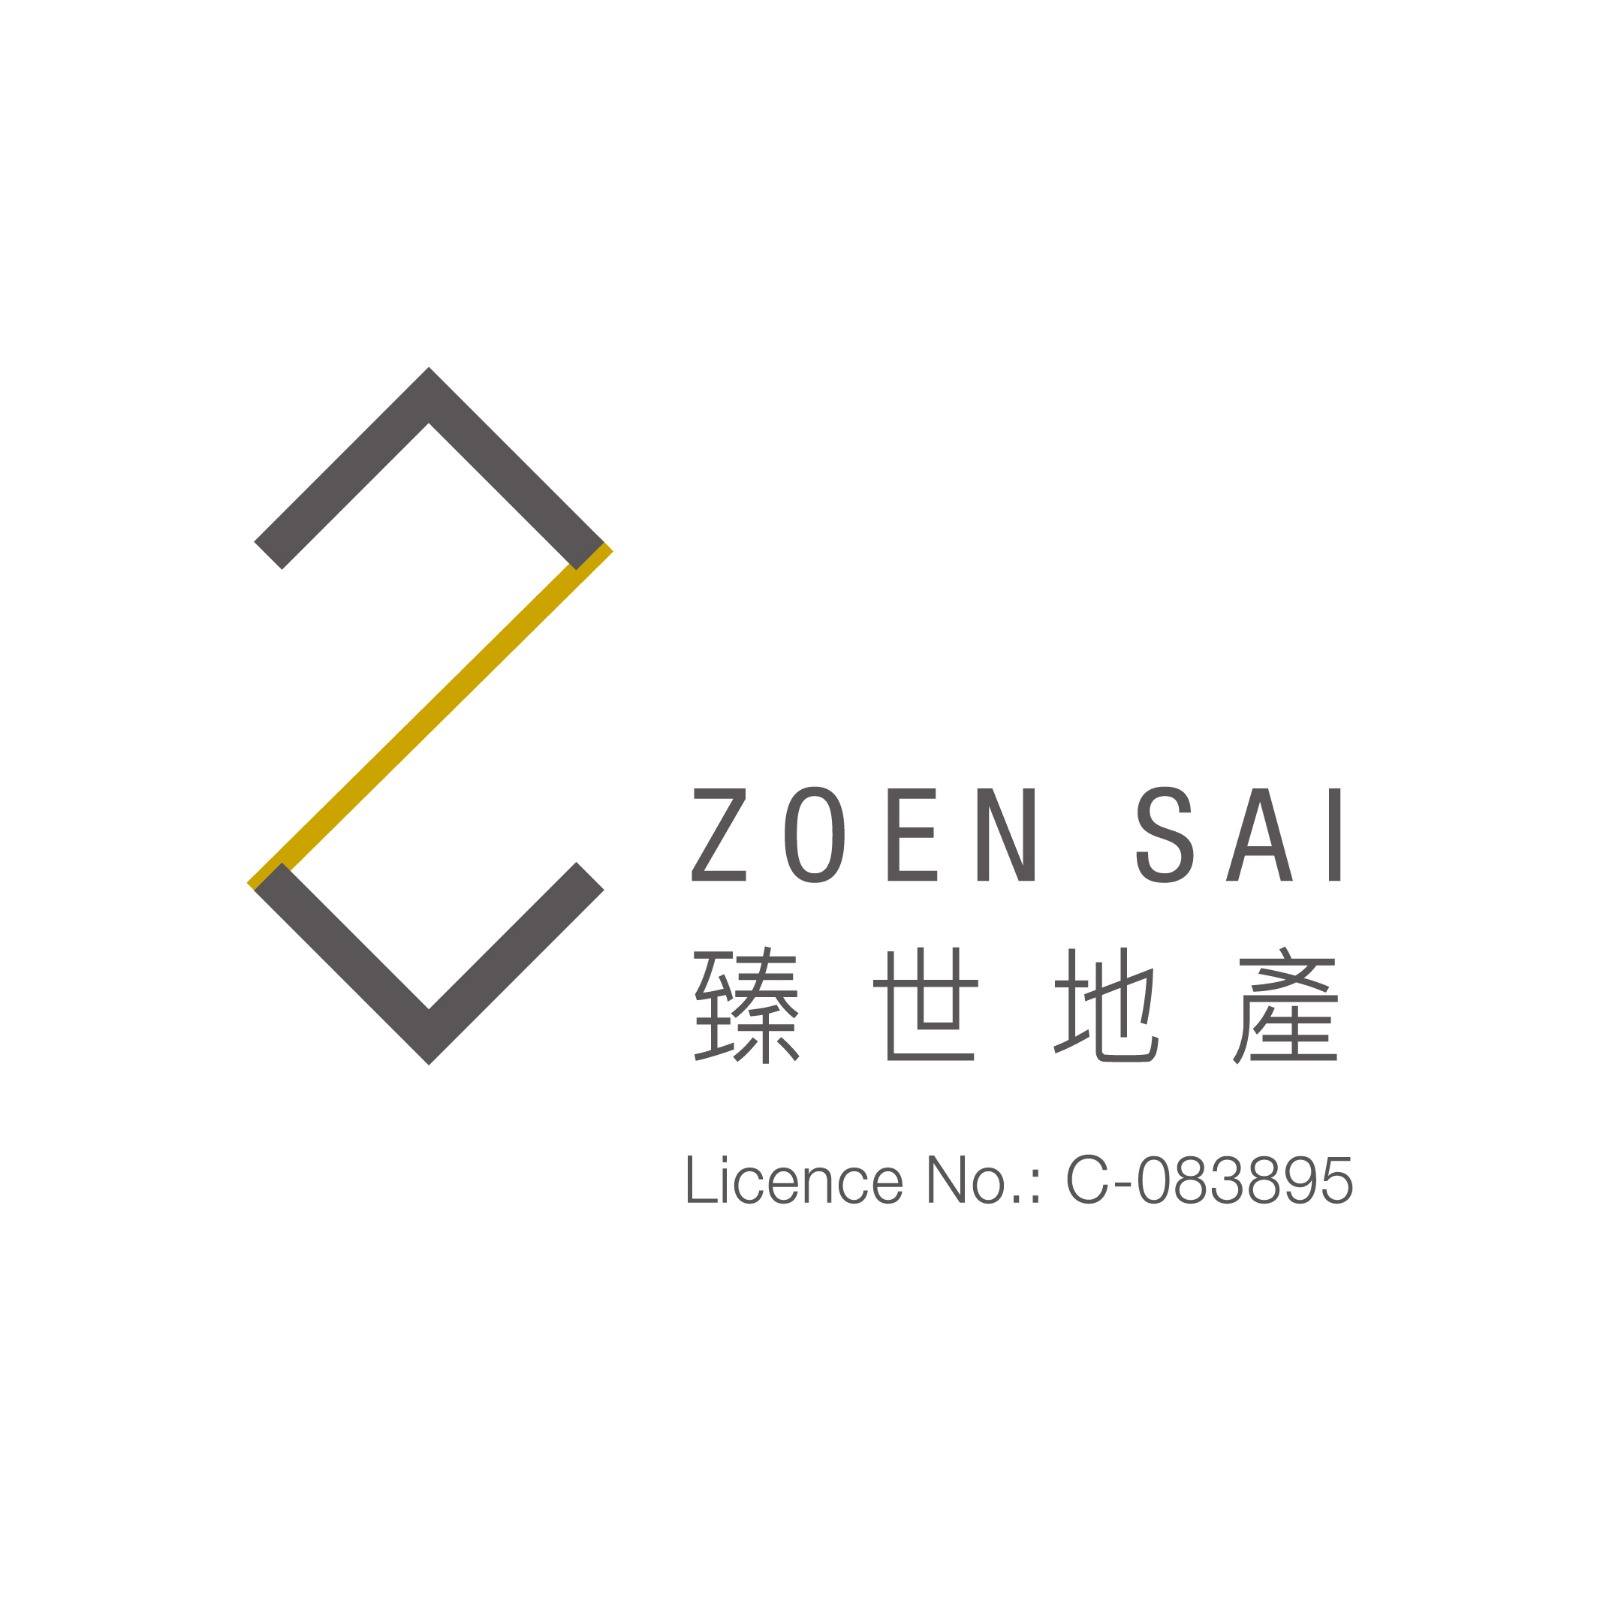 Industrial BuildingEstate Agent: Zoen Sai Property 臻世地產